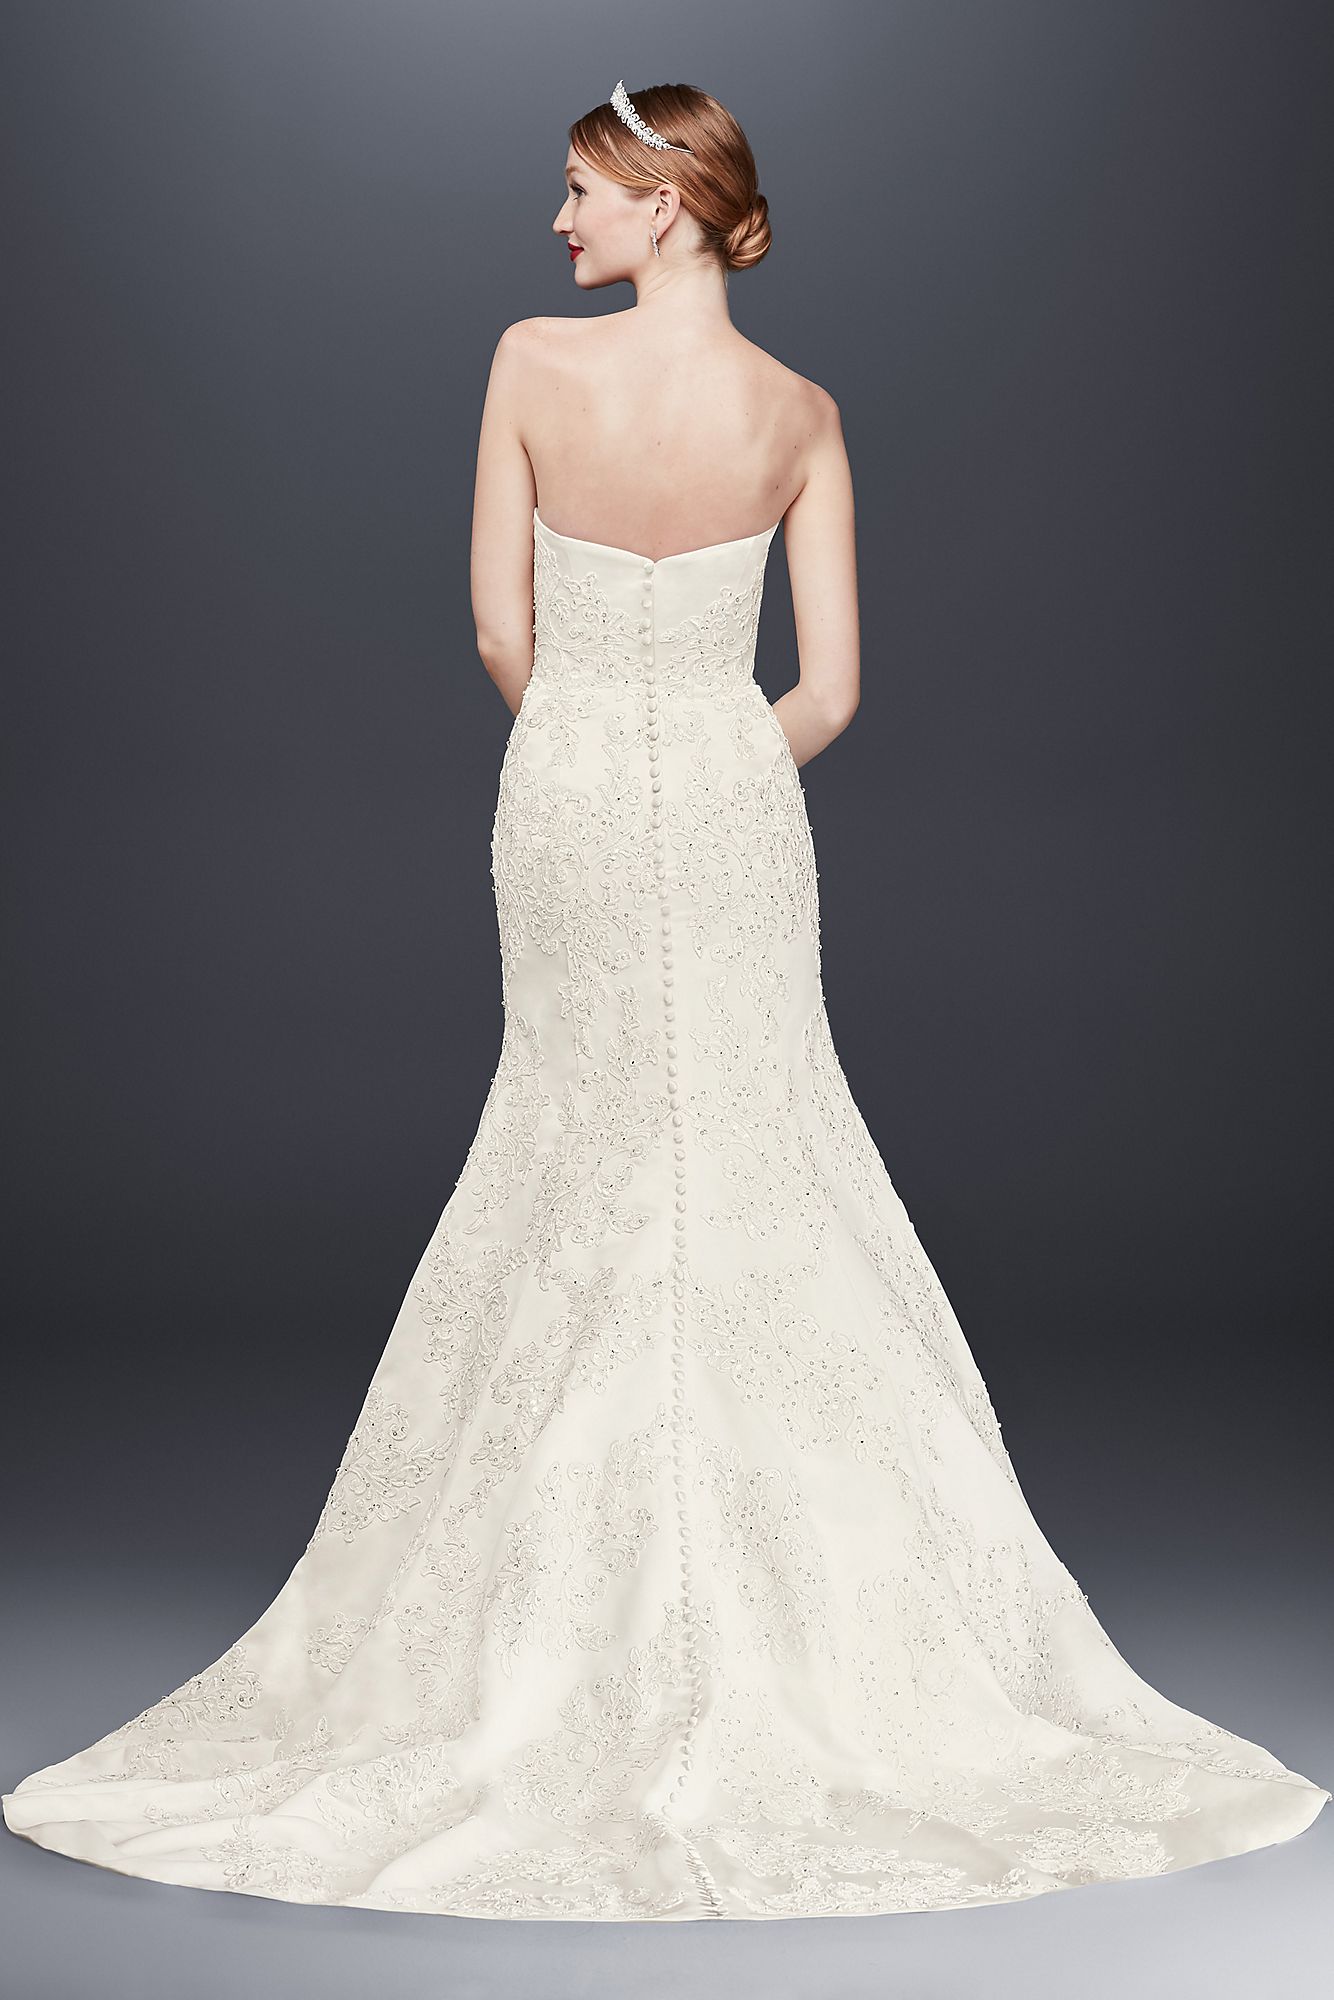 Satin Lace Strapless Wedding Dress CWG594